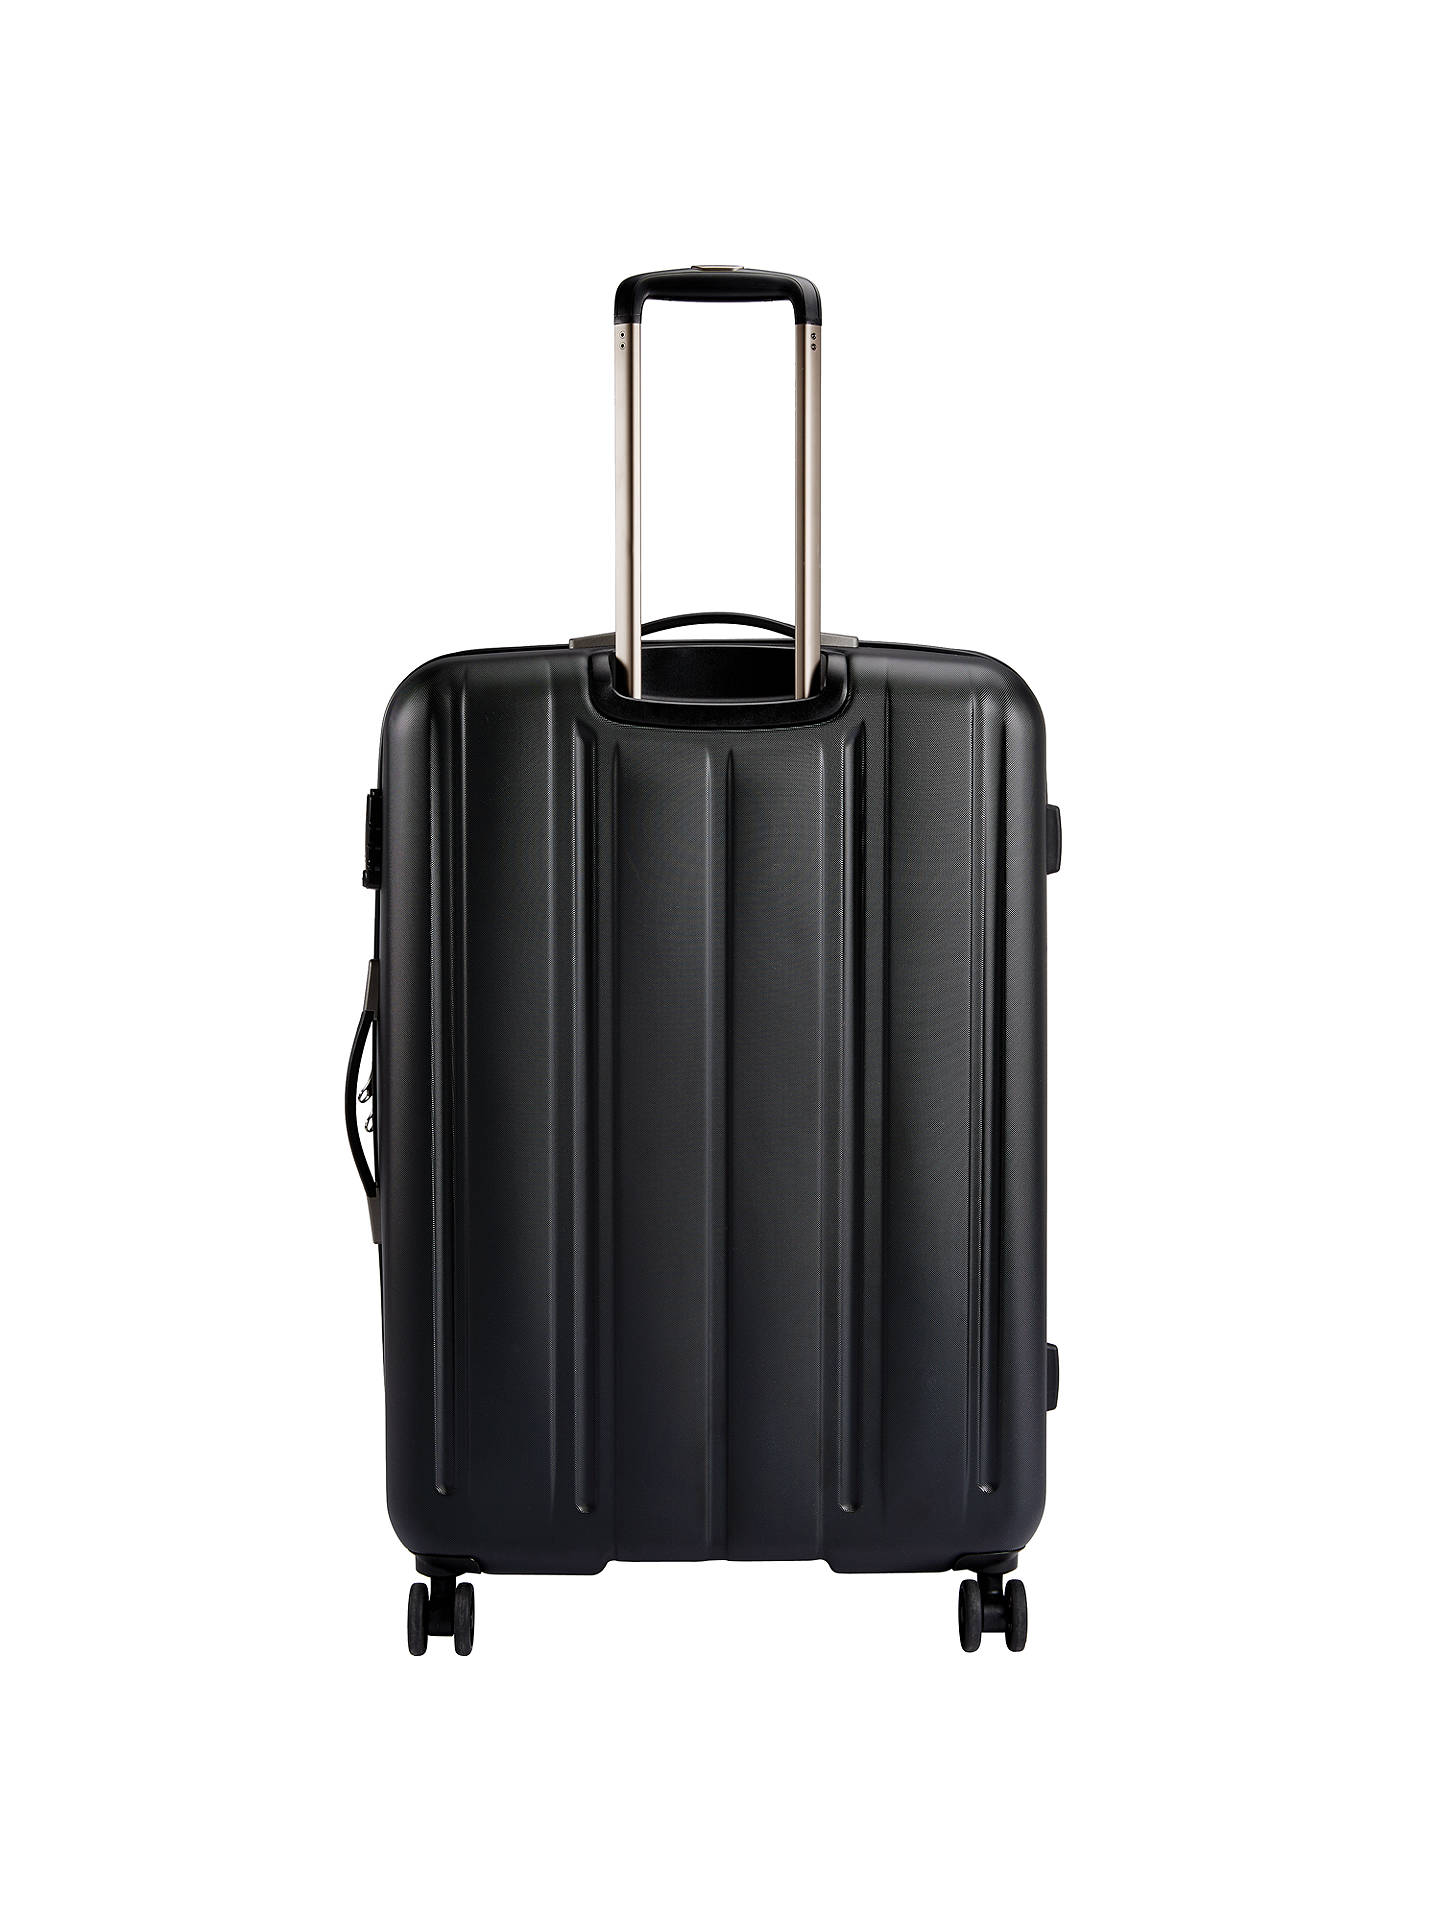 John Lewis & Partners Munich 4-Wheel Spinner 80cm Suitcase, Black at ...